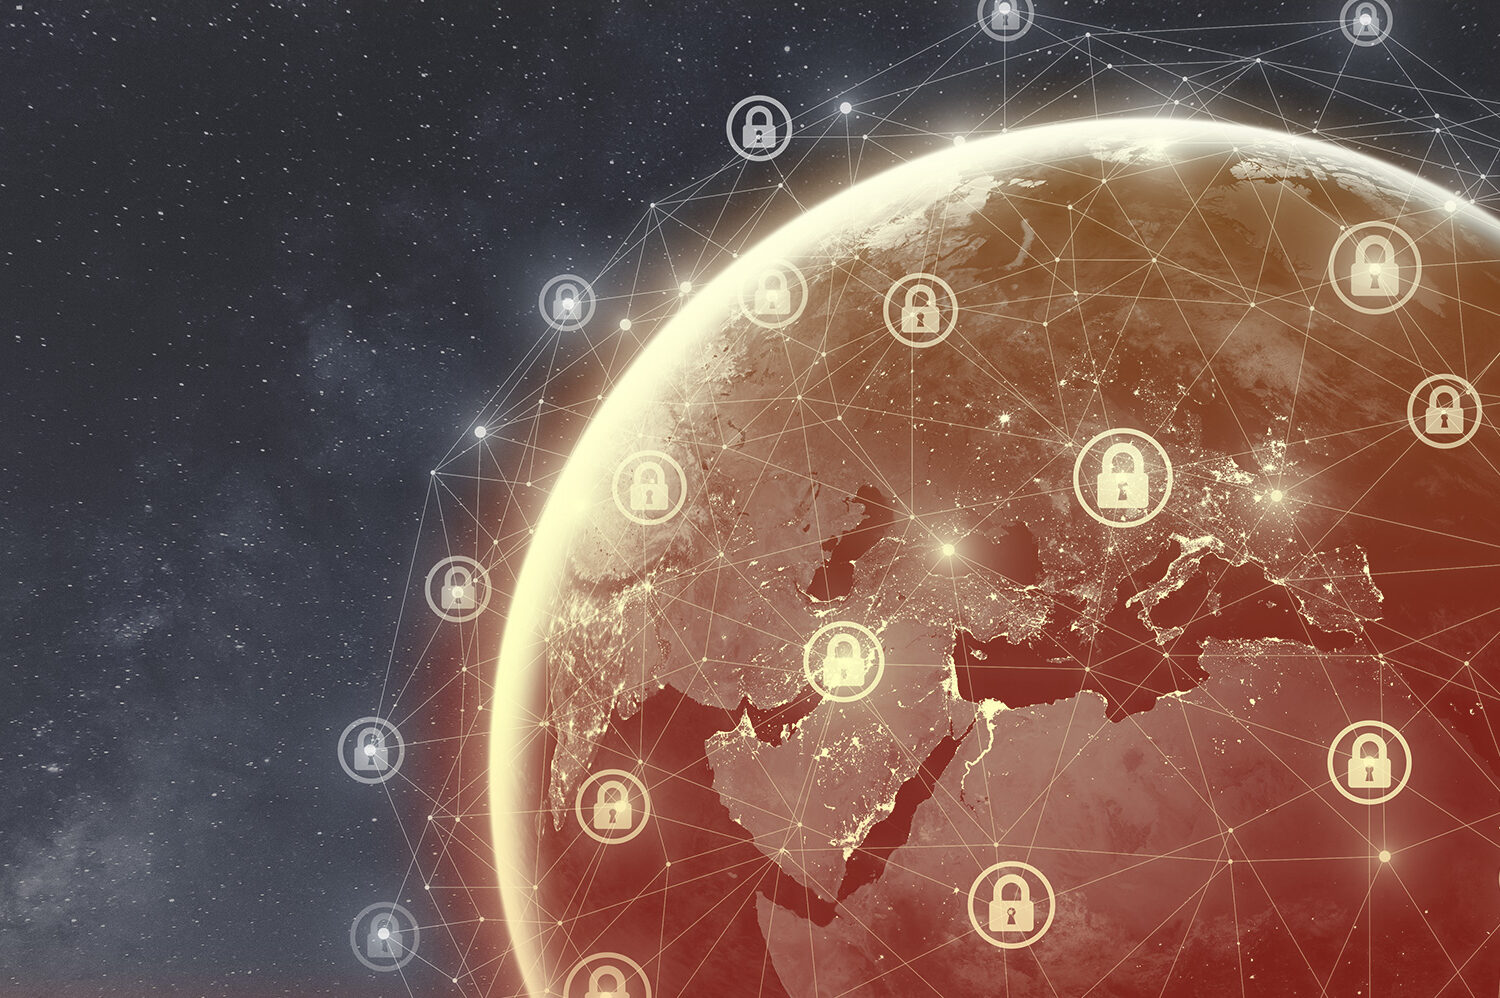 Locks placed in network around globe